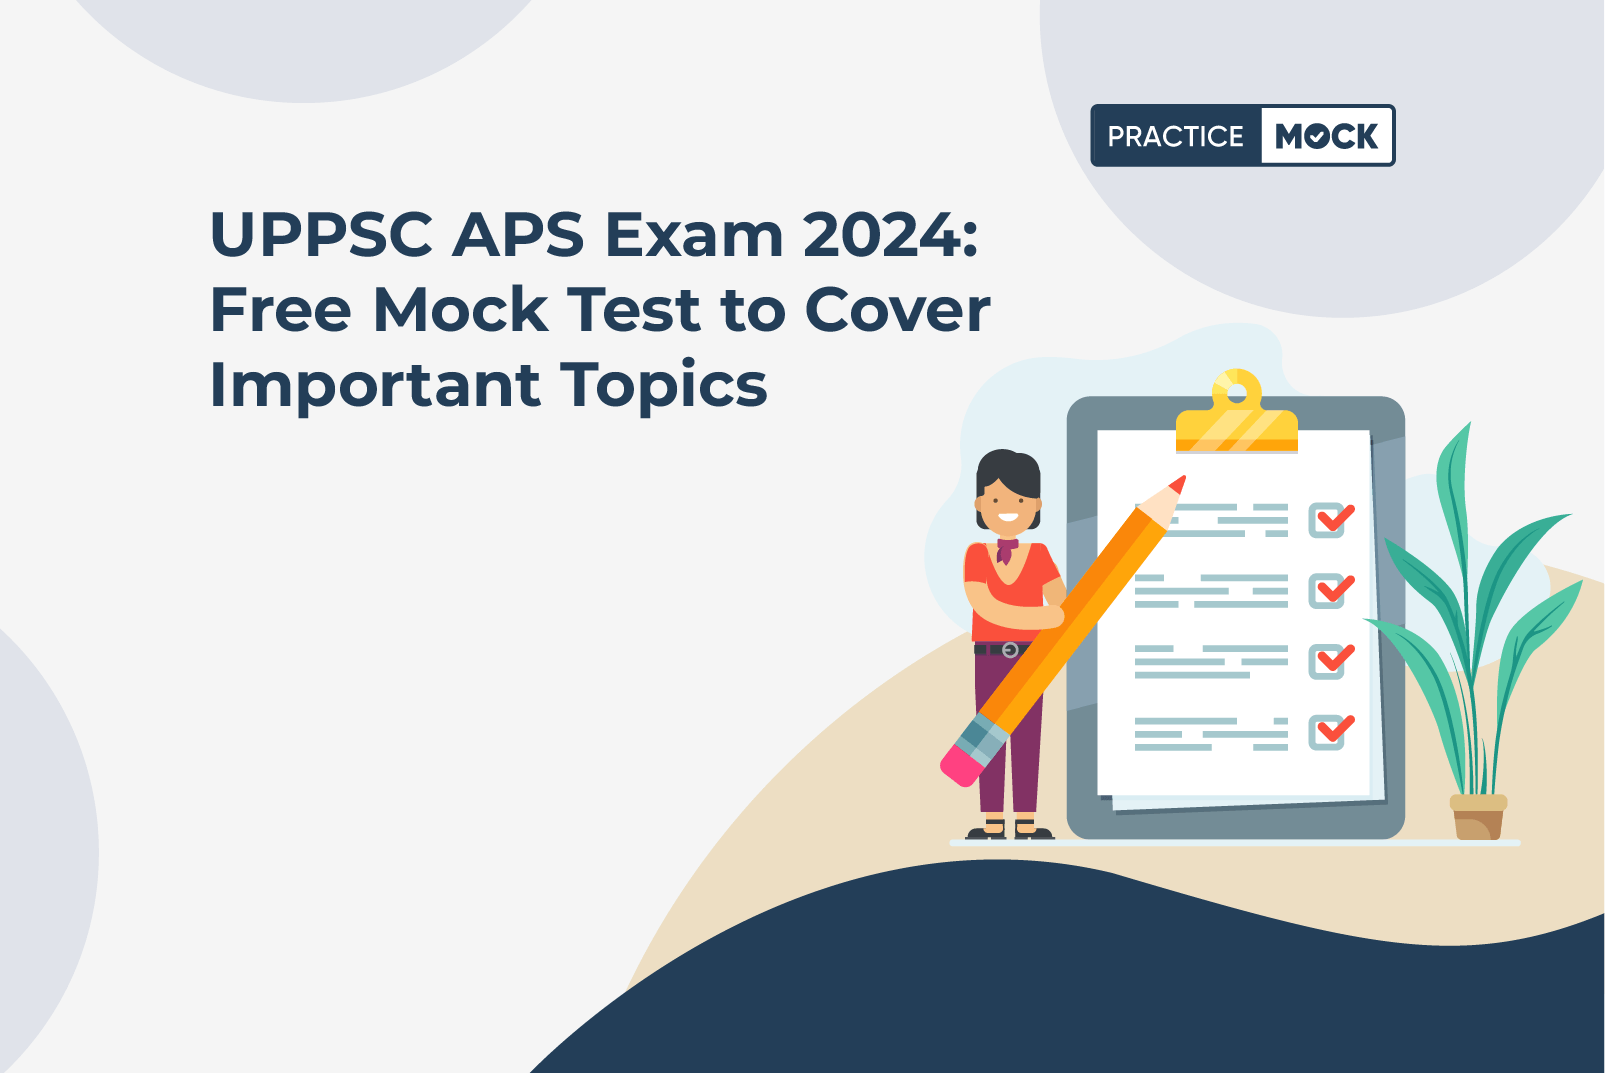 UPPSC APS Exam 2024 Free Mock Test to Cover Important Topics